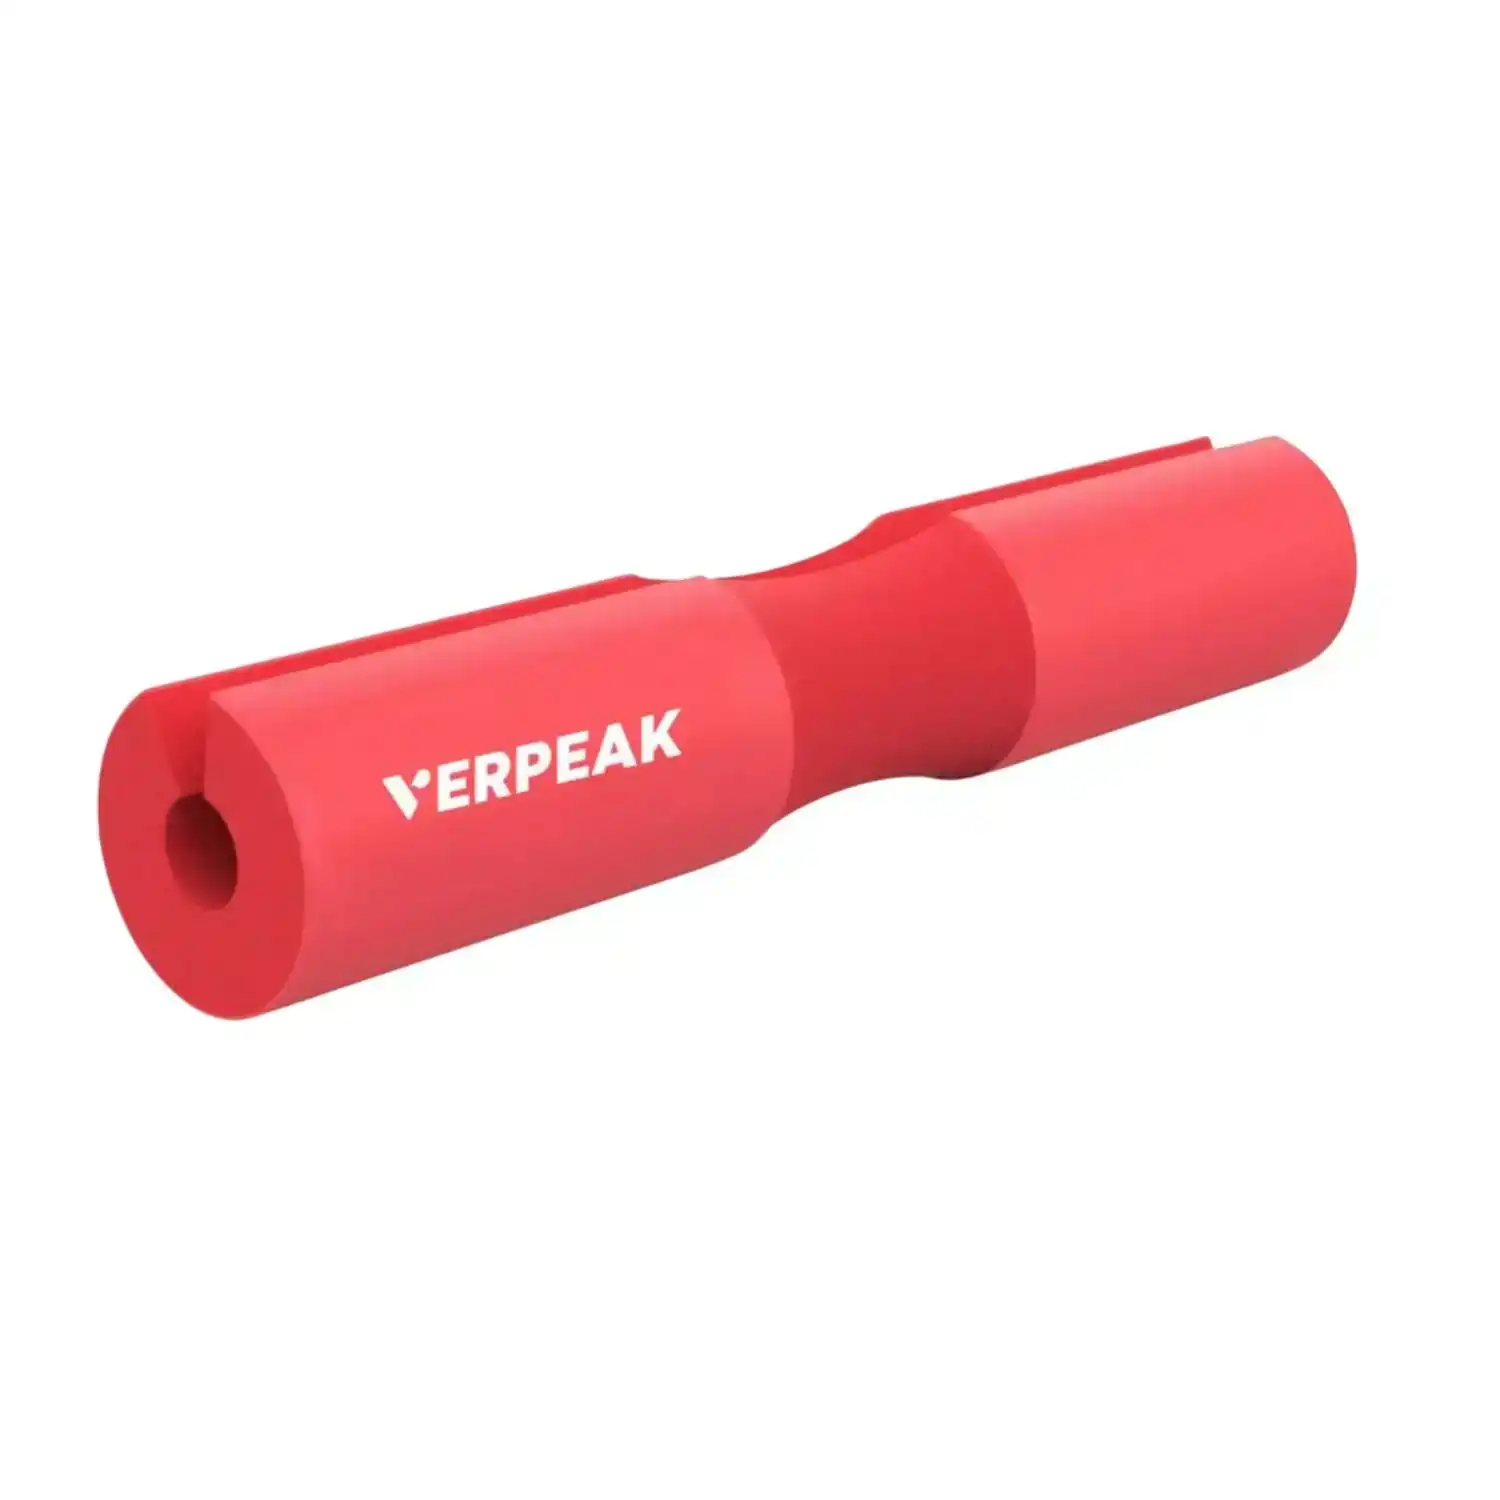 Verpeak Barbell Squat Pad Lightweight Portable Anti-Slip Material Red